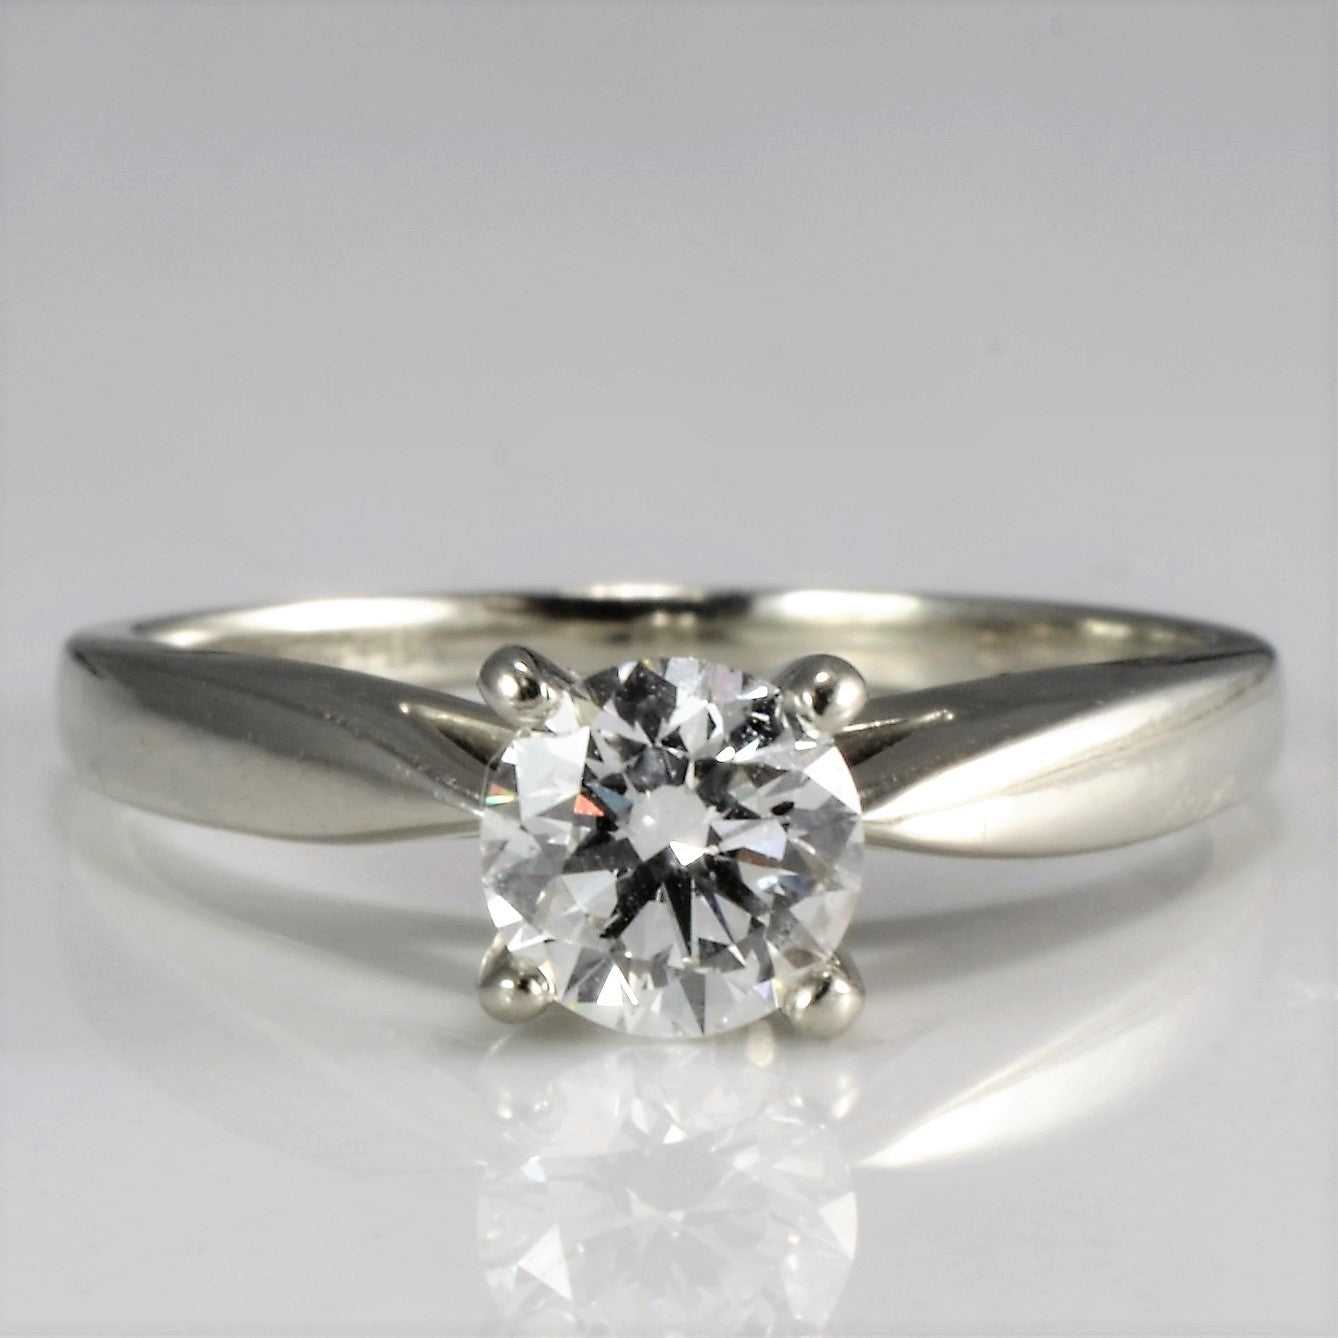 19K Gold Solitaire Diamond Engagement Ring | 0.51 ct, SZ 5.5 |